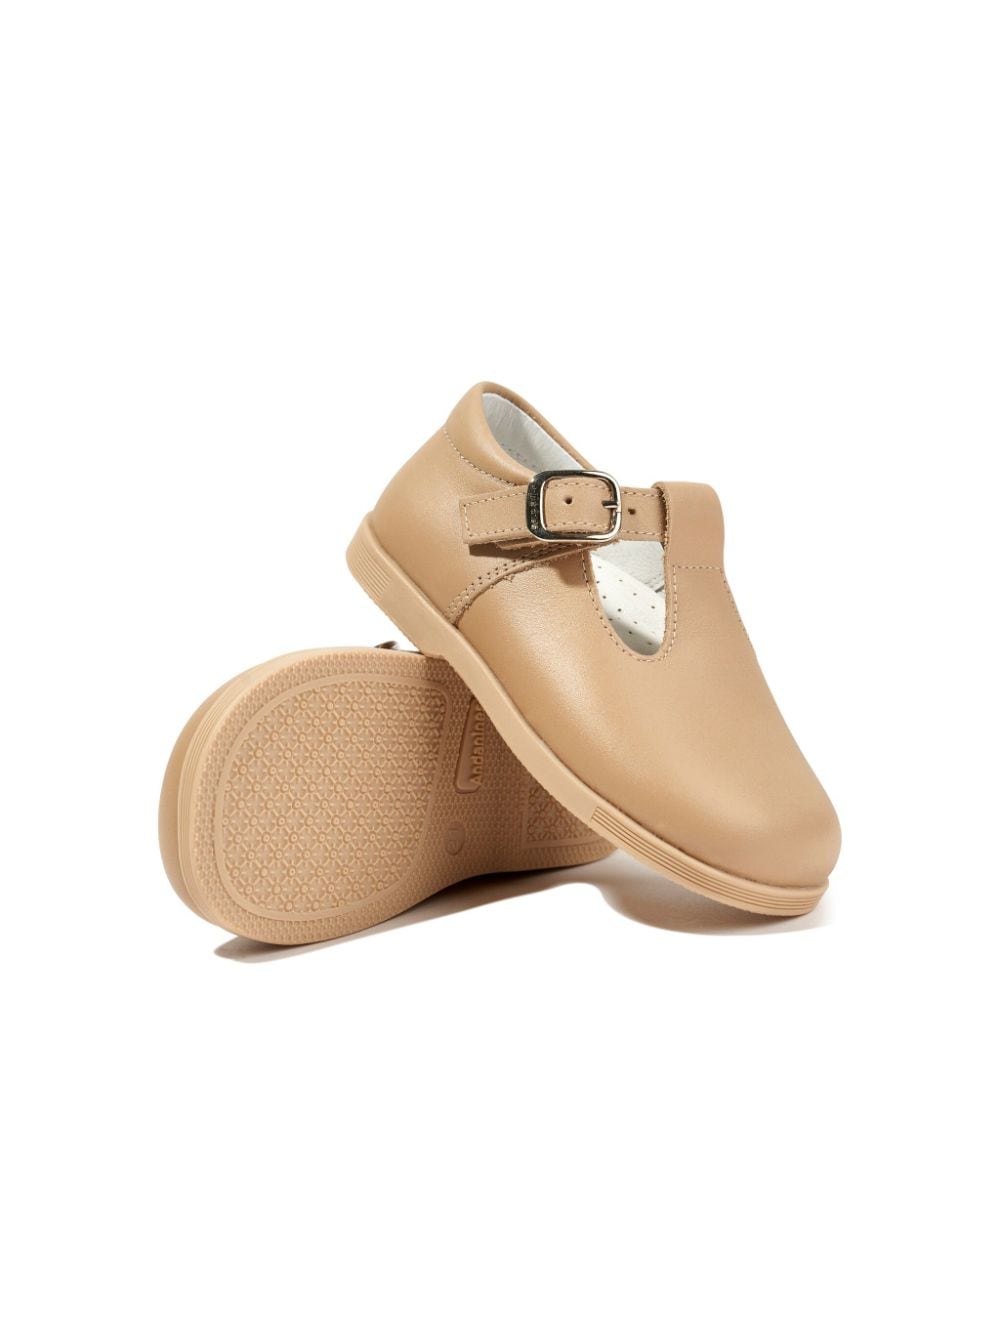 ANDANINES leather ballerina shoes - Beige